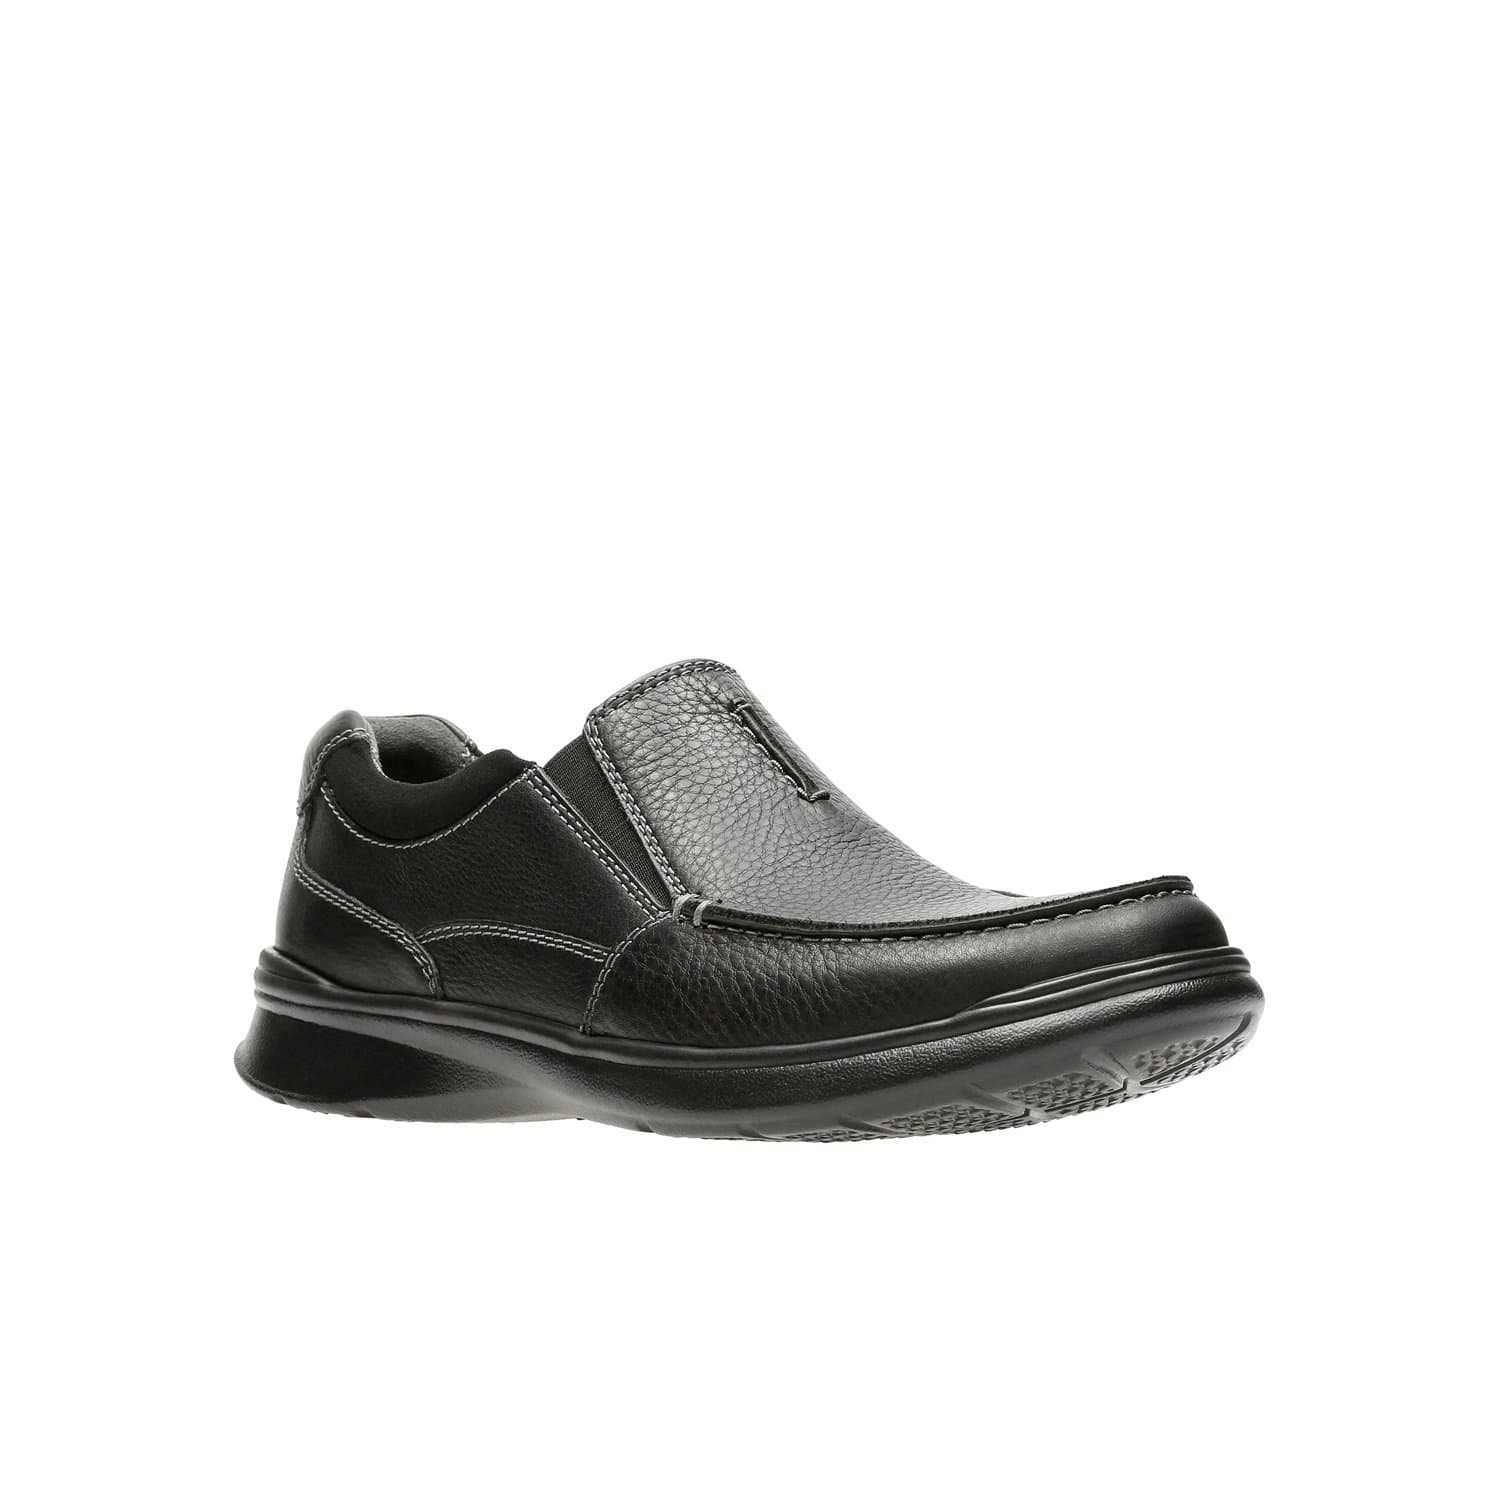 Clarks-Cotrell-Free-Men's-Shoes-Black-Oily-Lea-26131593